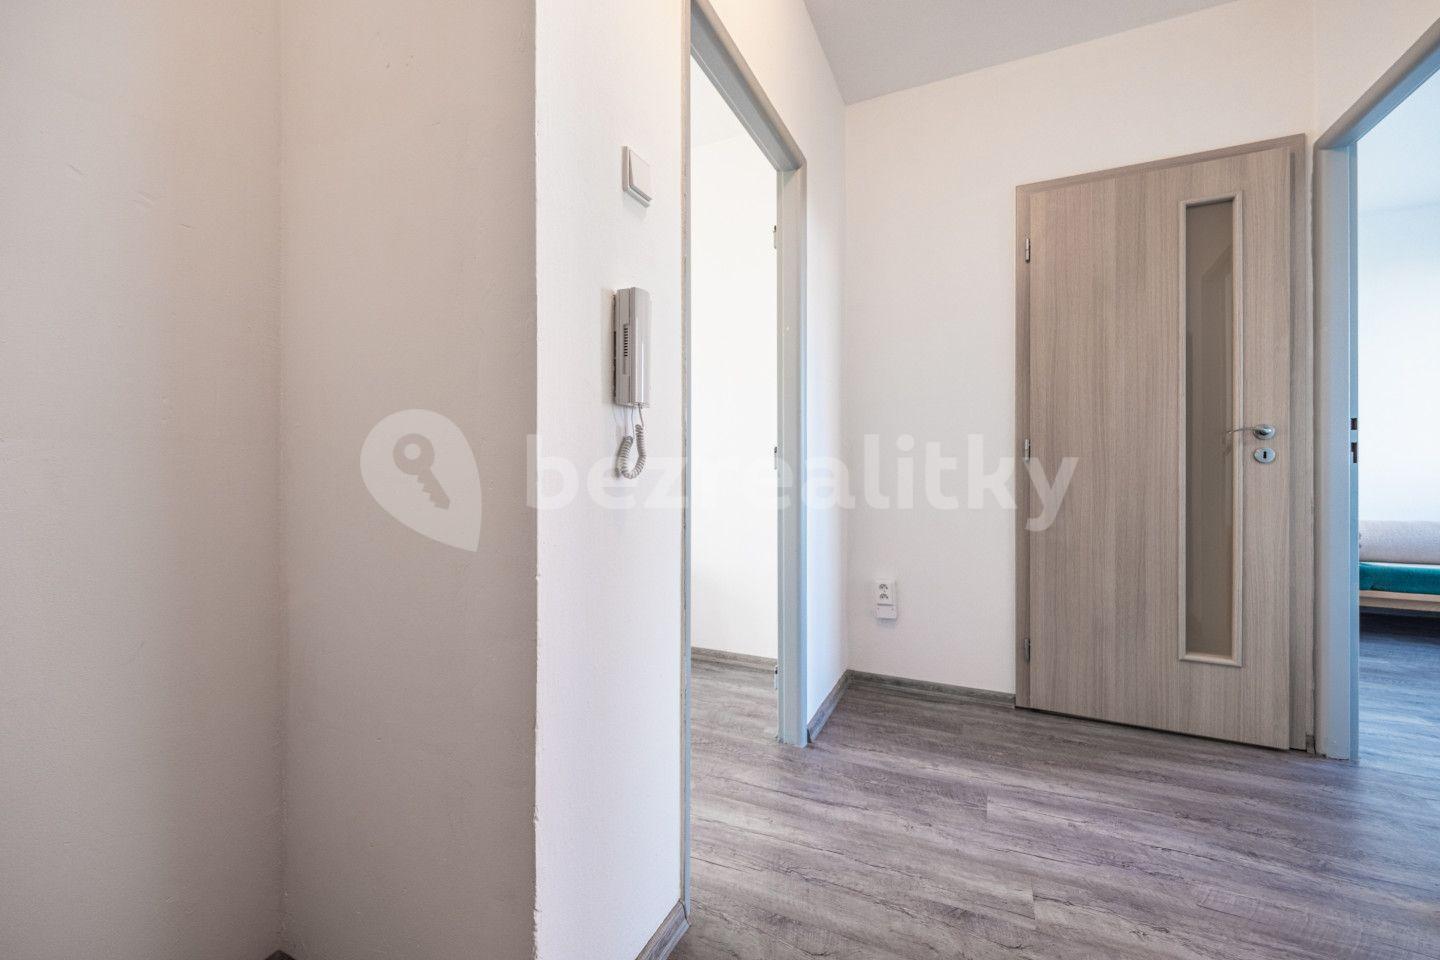 3 bedroom flat for sale, 56 m², Růžová, Most, Ústecký Region